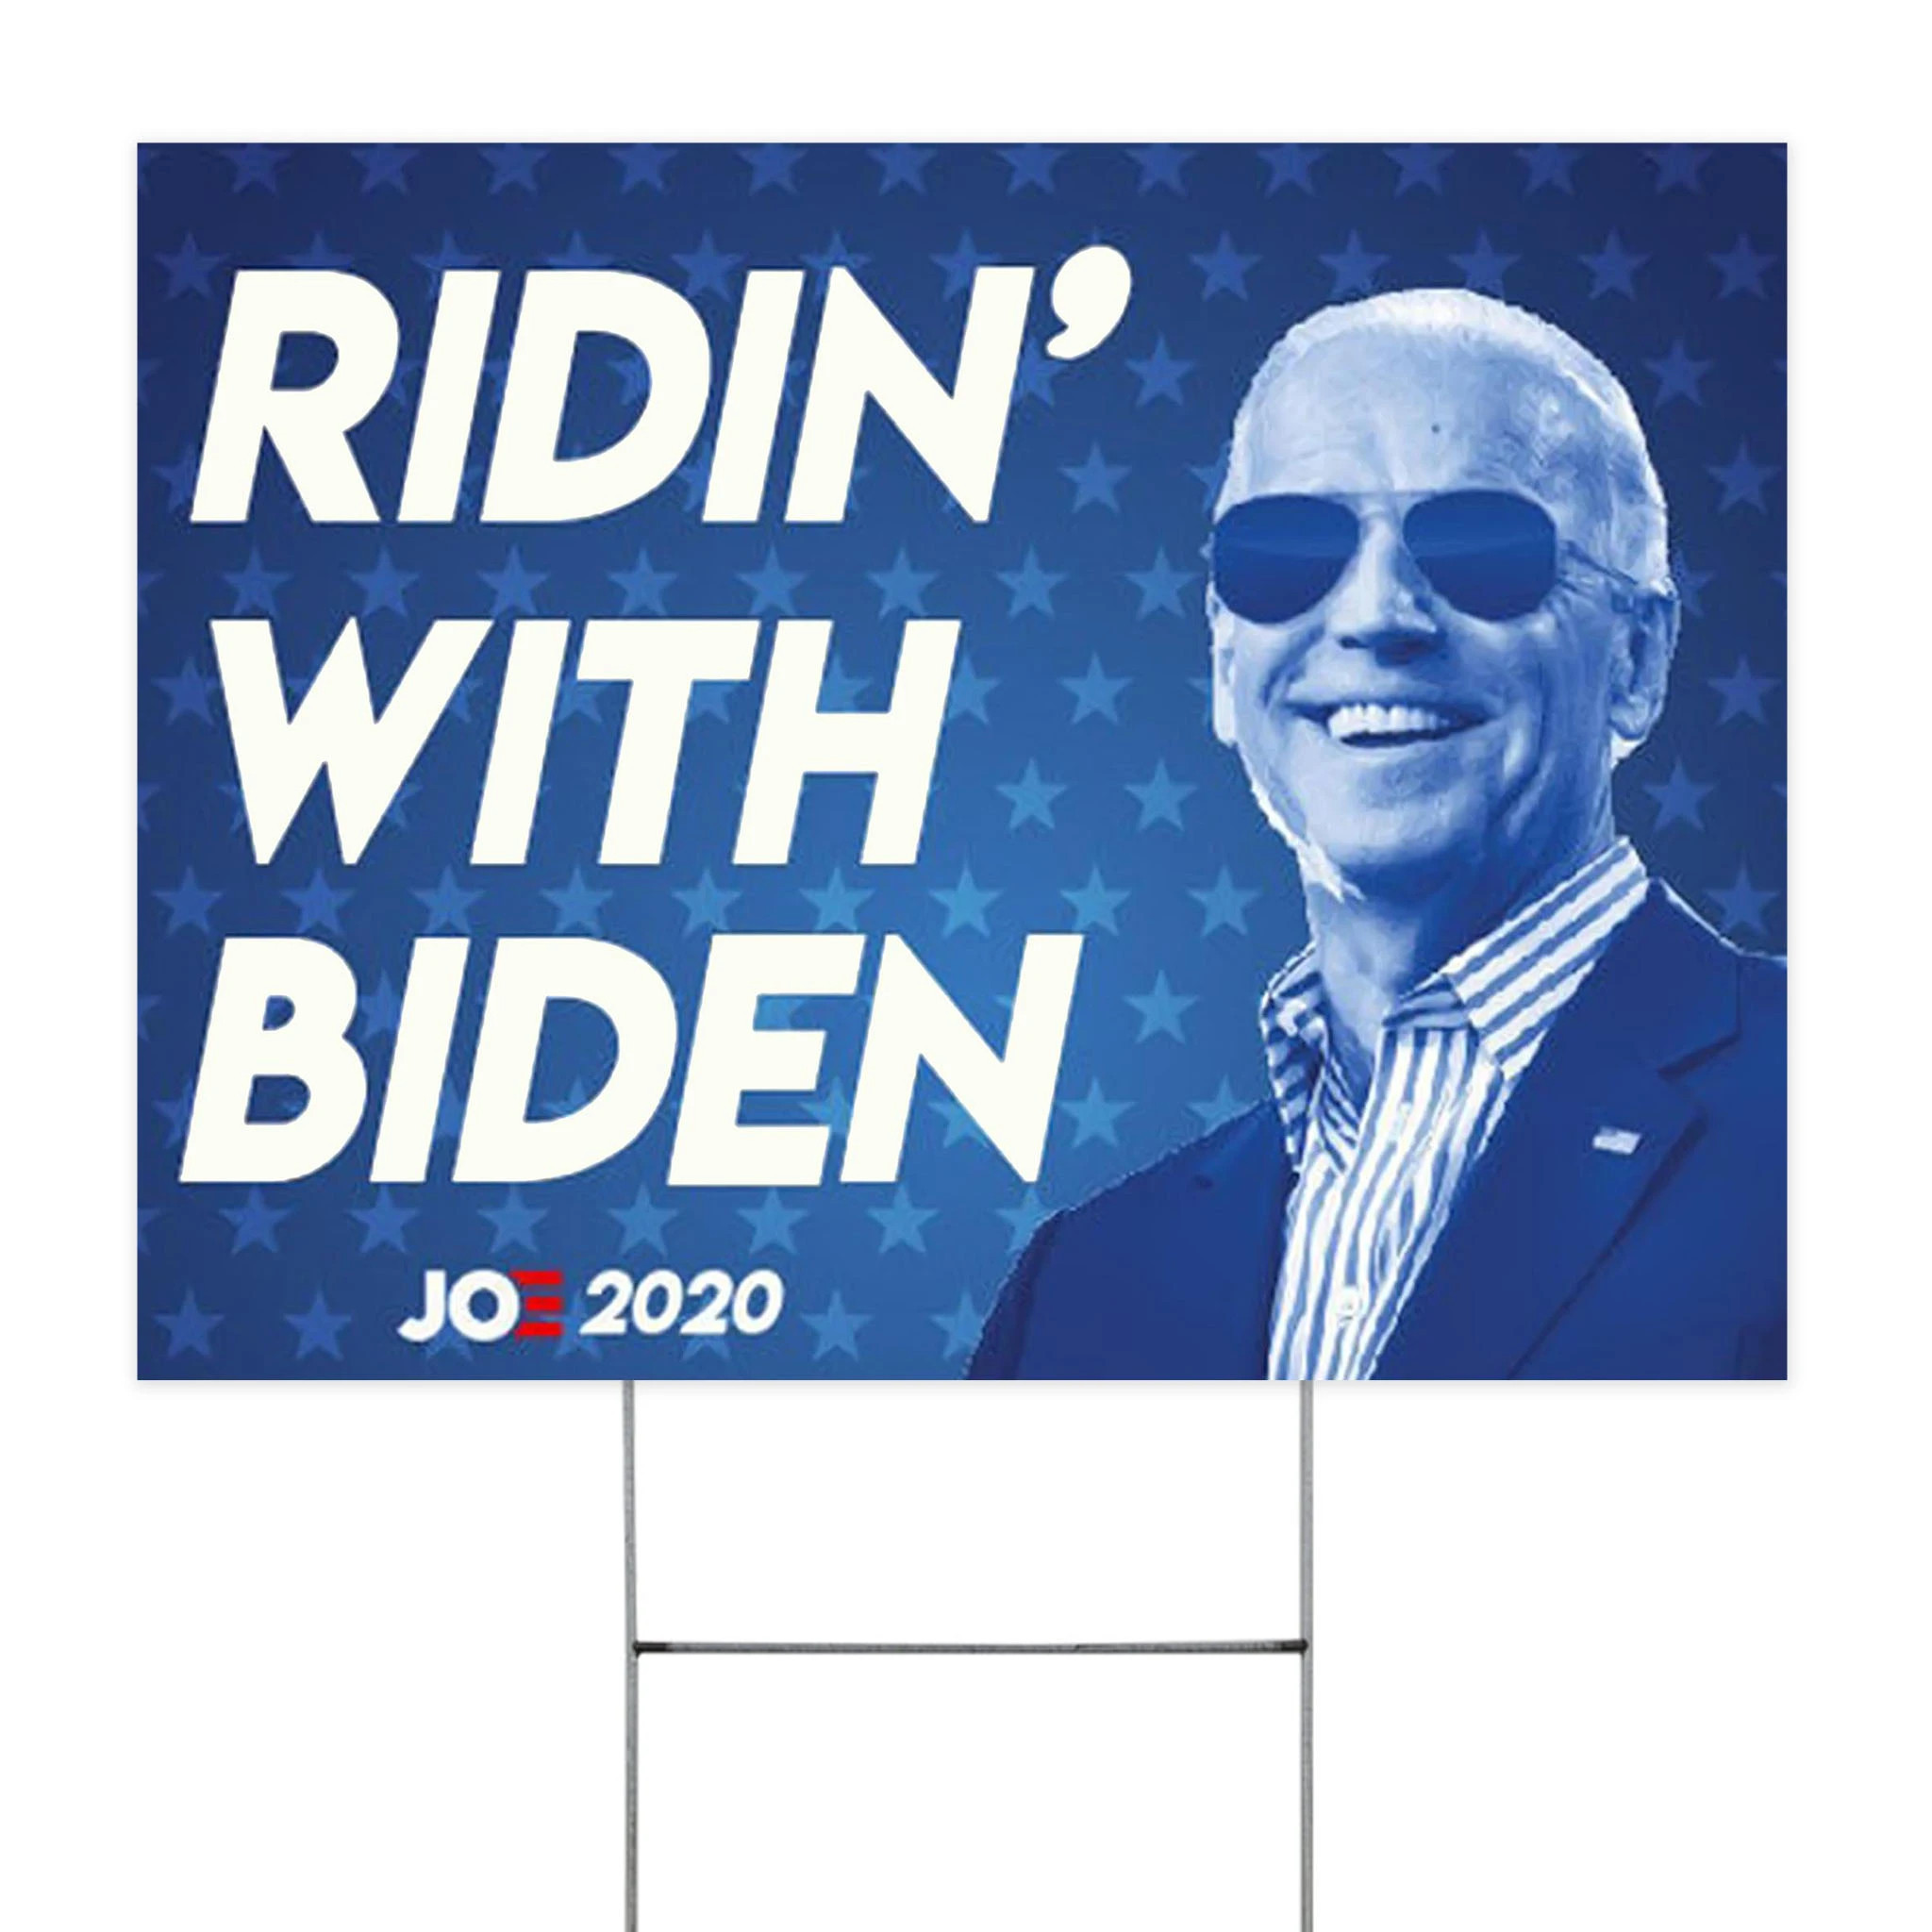 Ridin With Biden Joe 2020 Yard Sign Support Biden Campaign Election Sign Presidential Debate